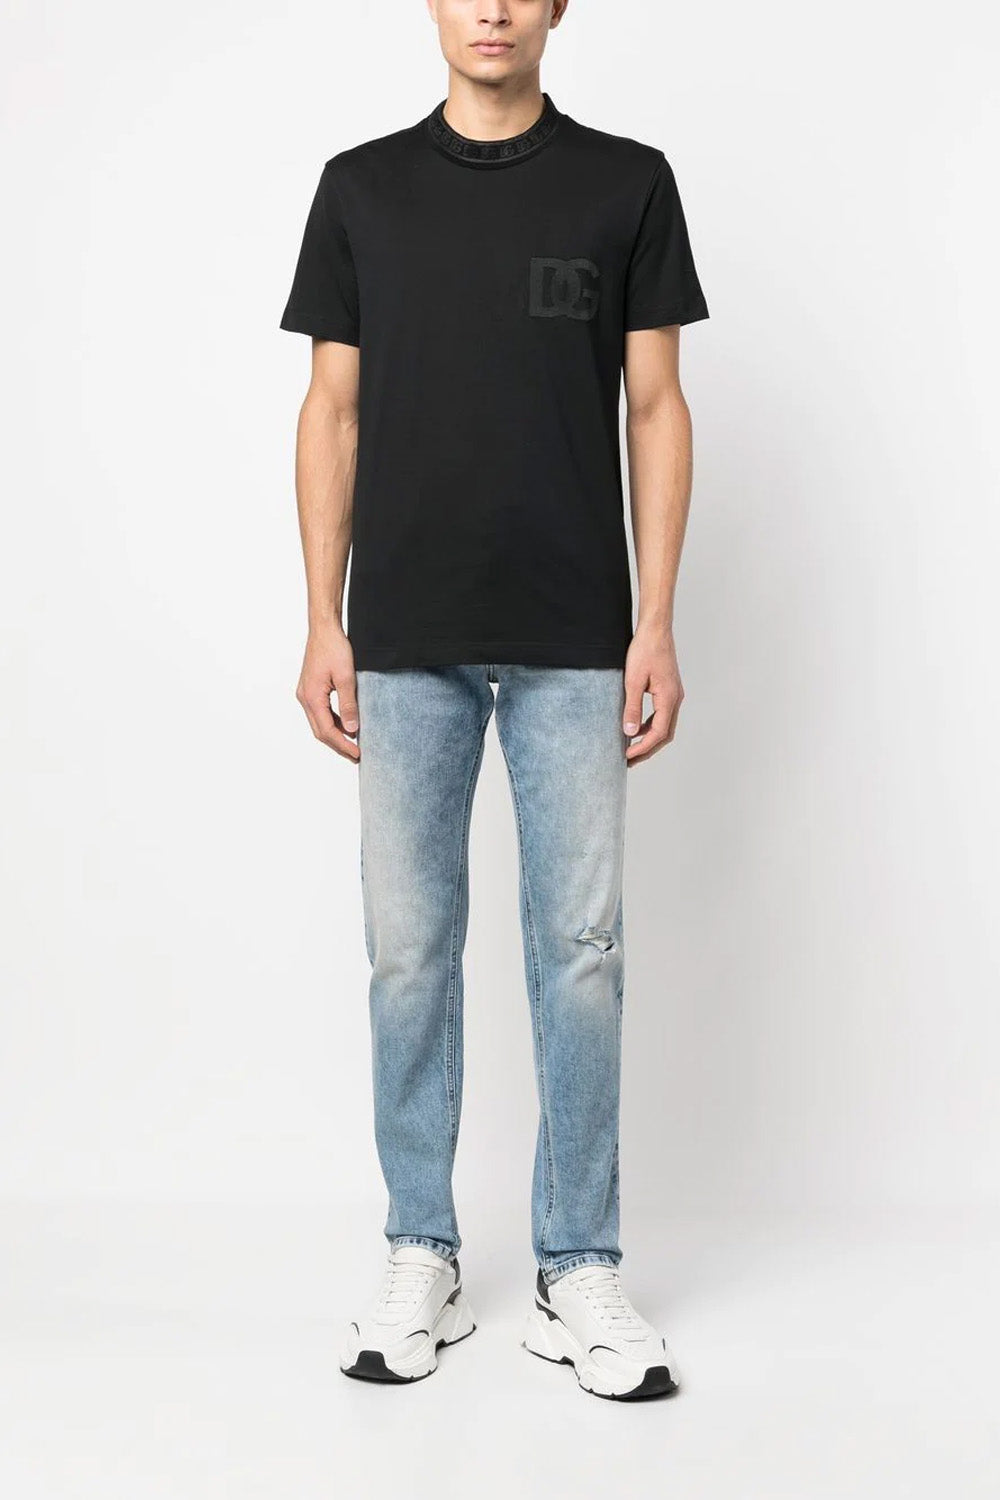 Dolce & Gabbana DG Logo T-shirt black